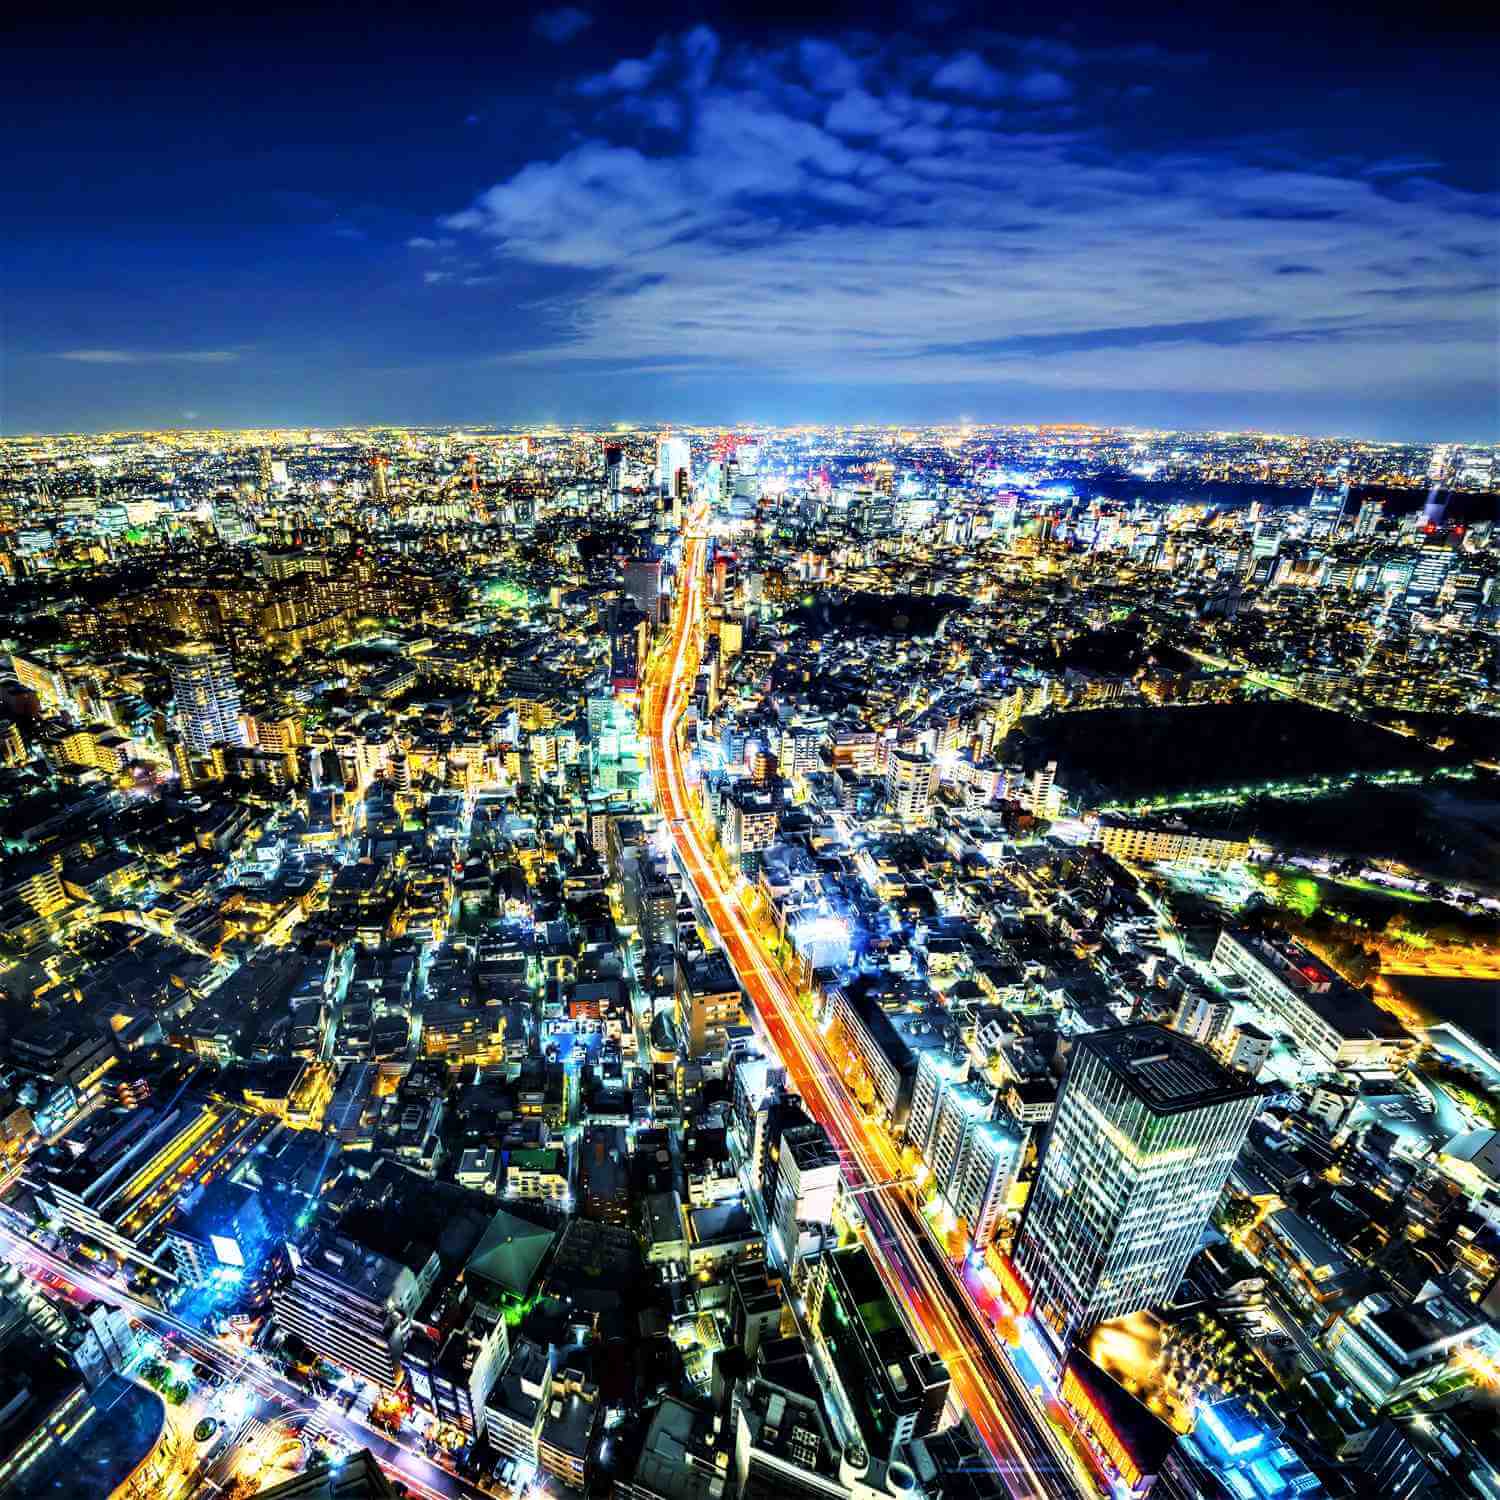 Roppongi Hills Mori Tower in Tokyo = Shutterstock 9